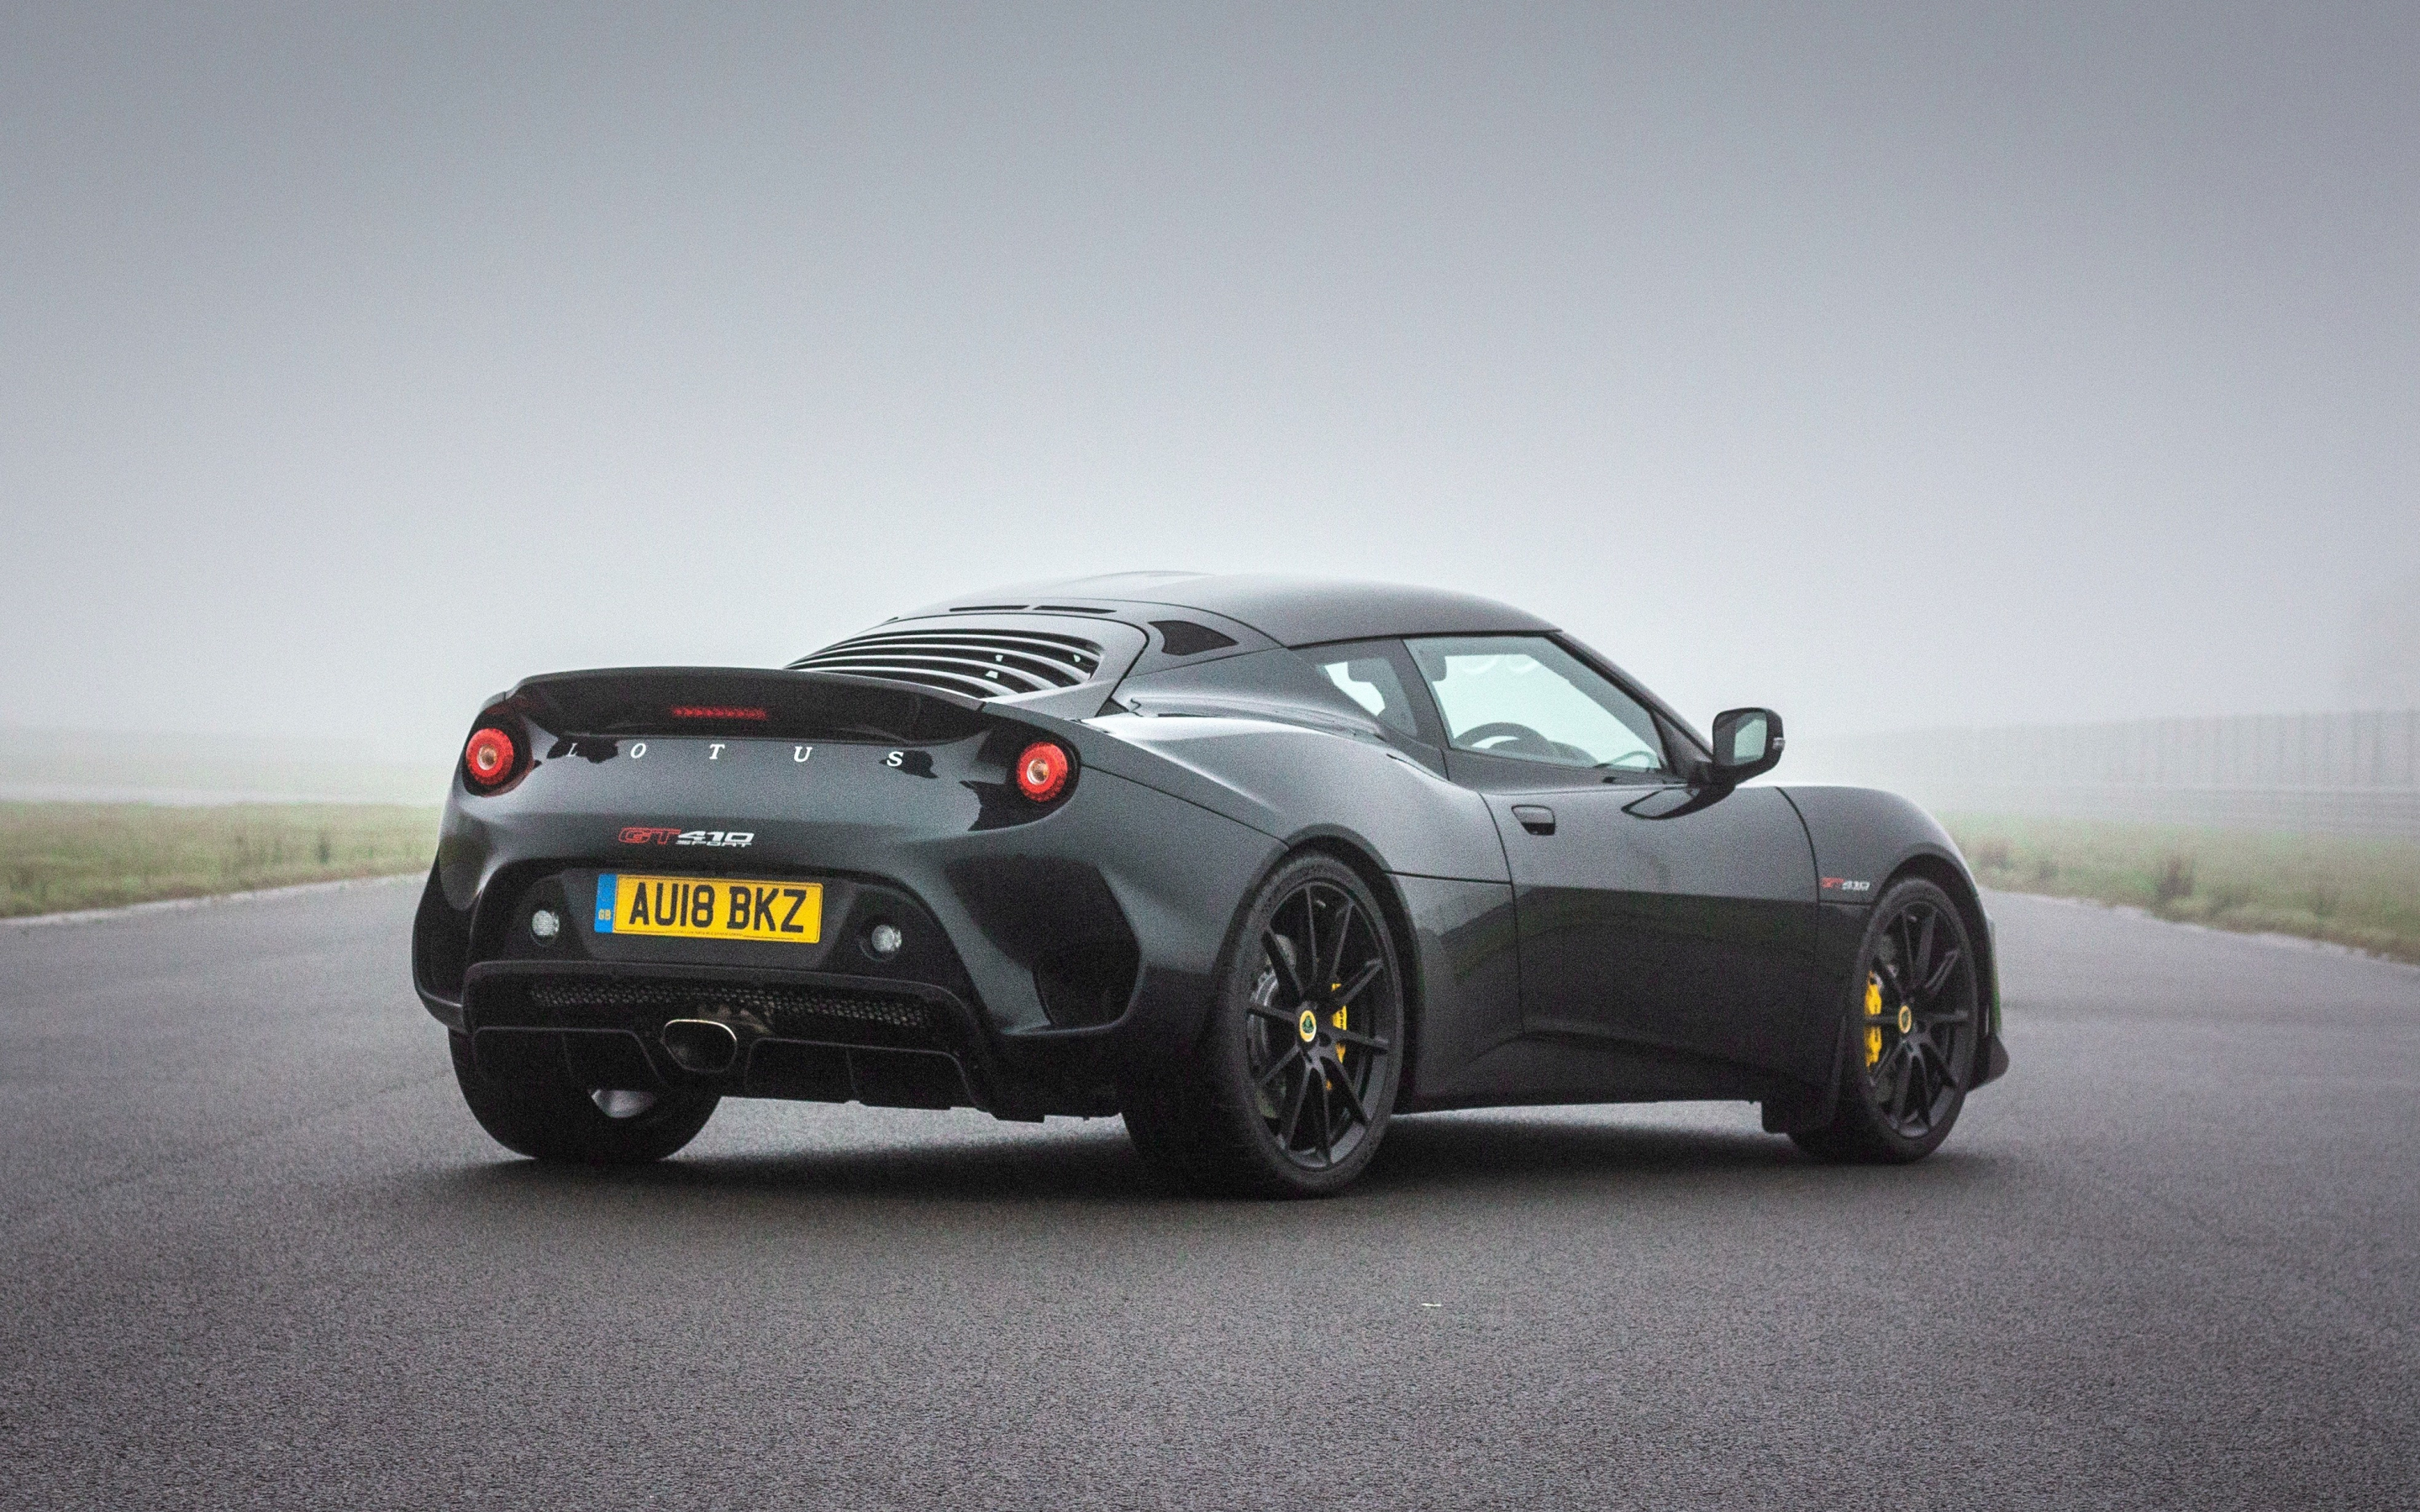 2018, Lotus evora GT410 sport, rear view, outdoor, 2880x1800 wallpaper